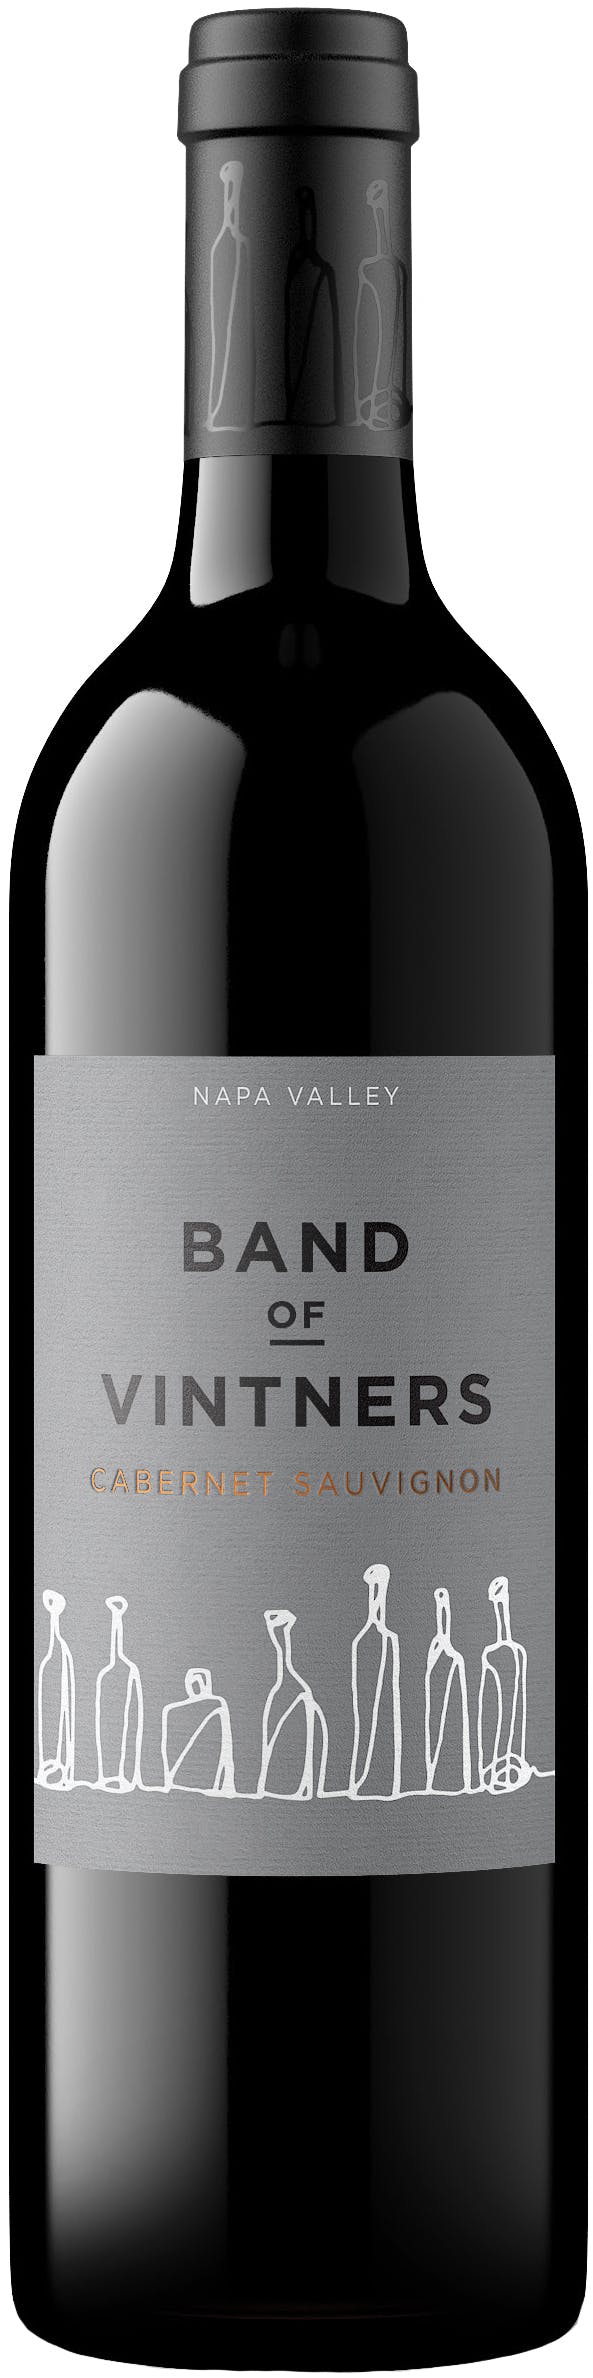 Ballentine Vineyards Zinfandel Reserve Napa Valley 2018 - America